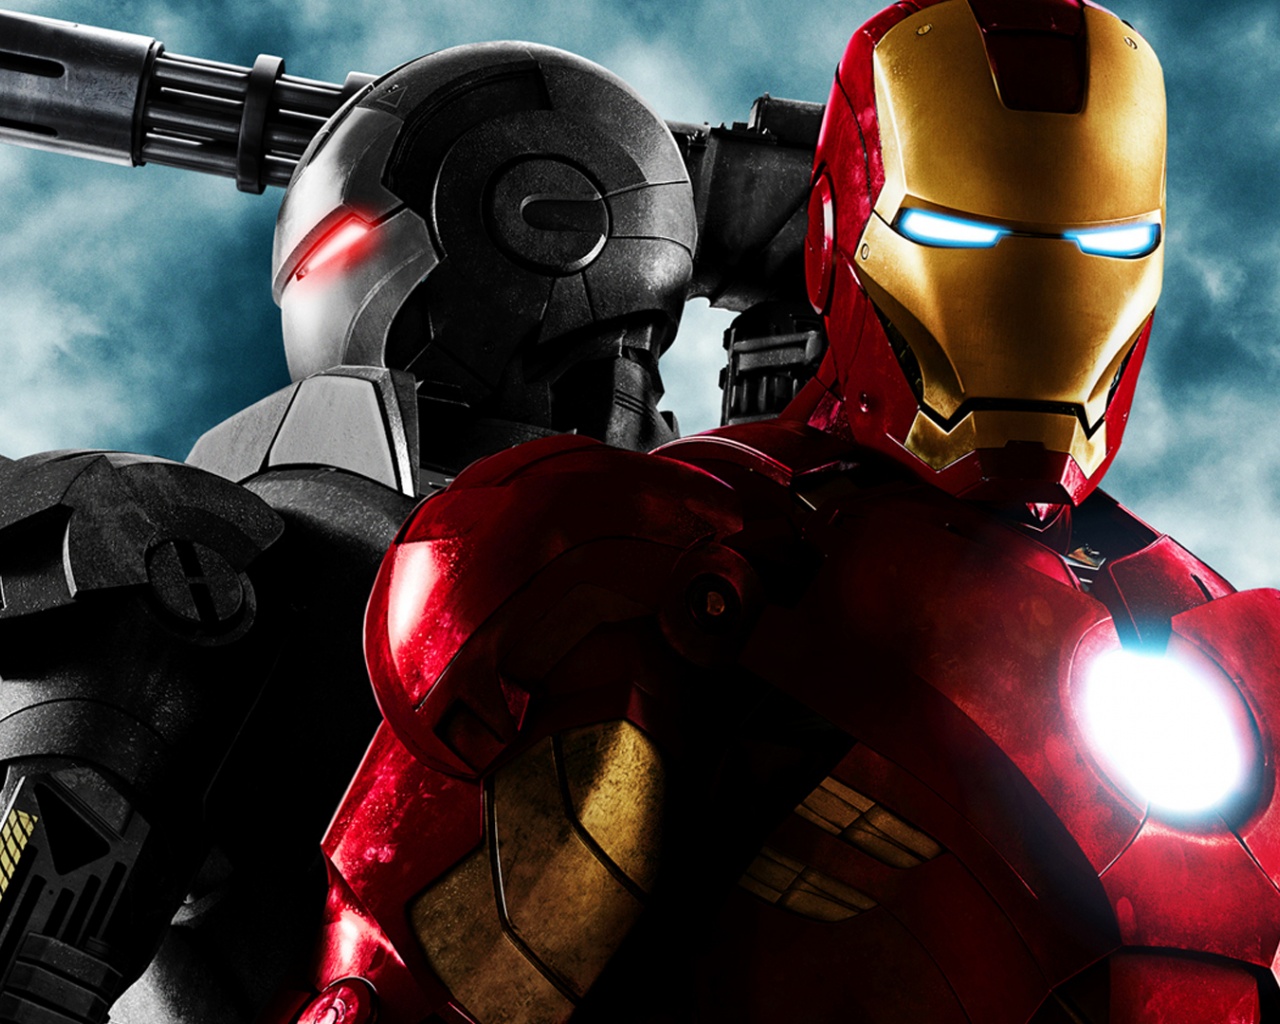 Iron Man 2 Poster, movies desktop PC and Mac wallpaper